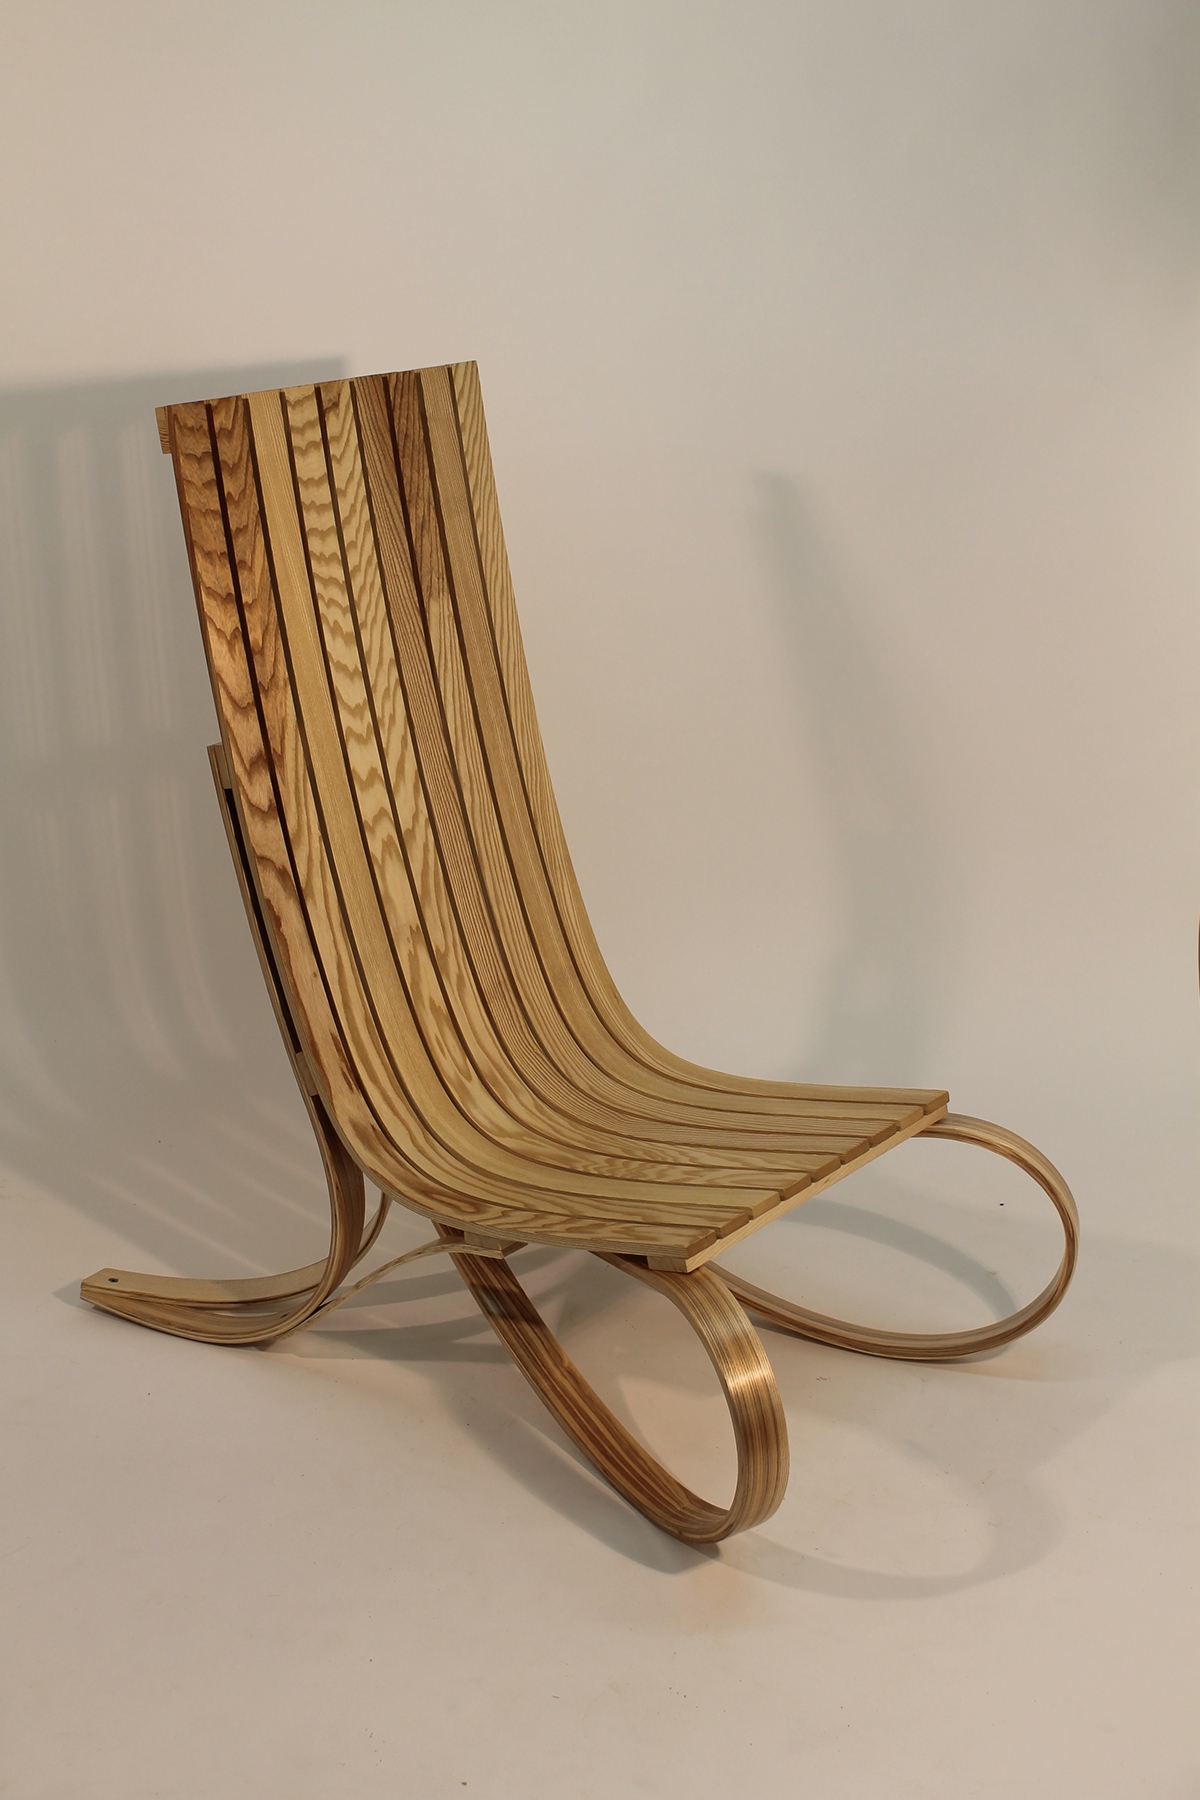 Sculptural seat ash woodwork seat chair steambending Lamination